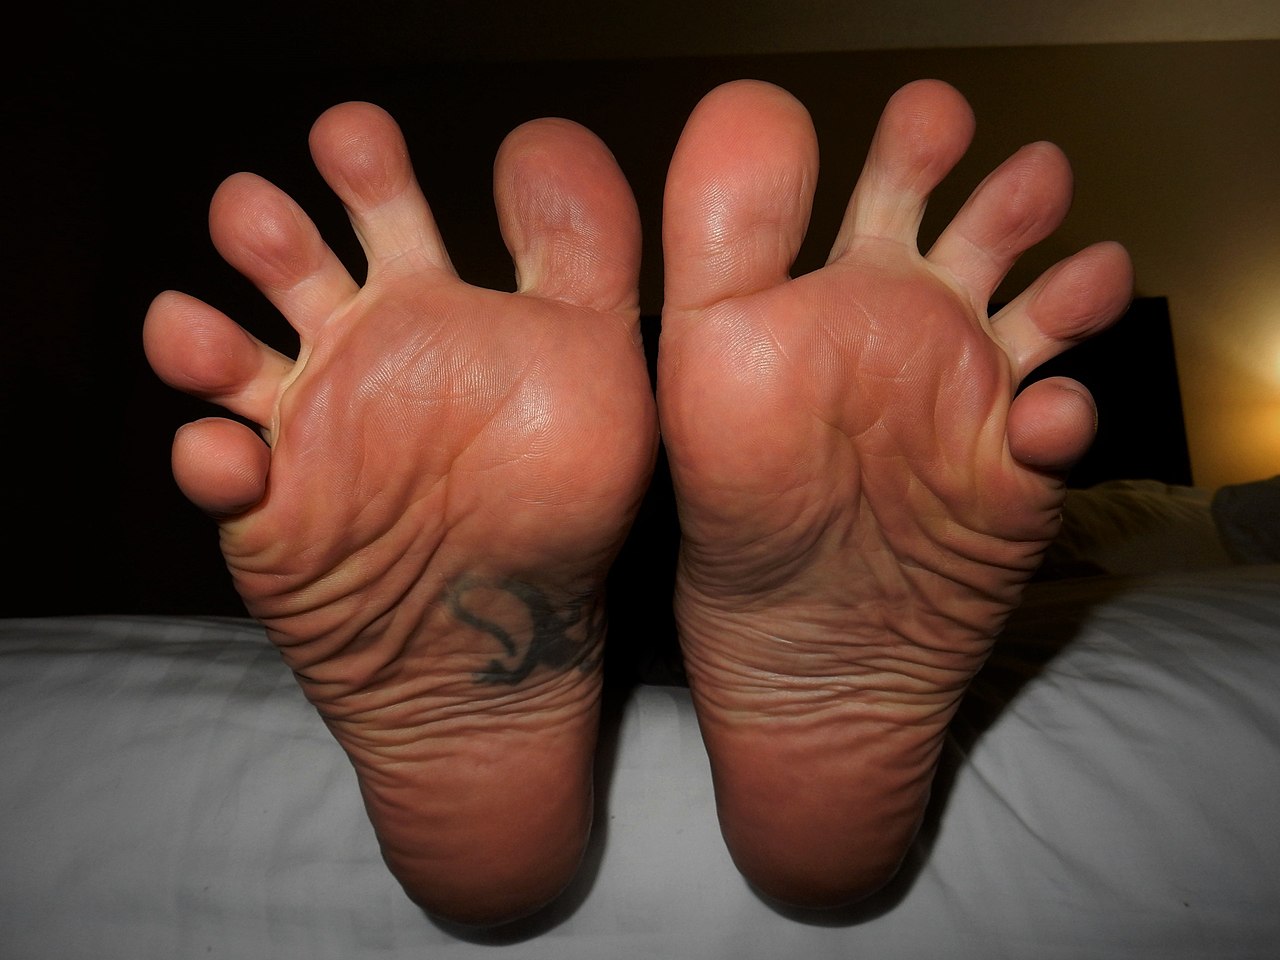 File:Soles Of Human Feet.jpg - Wikimedia Commons